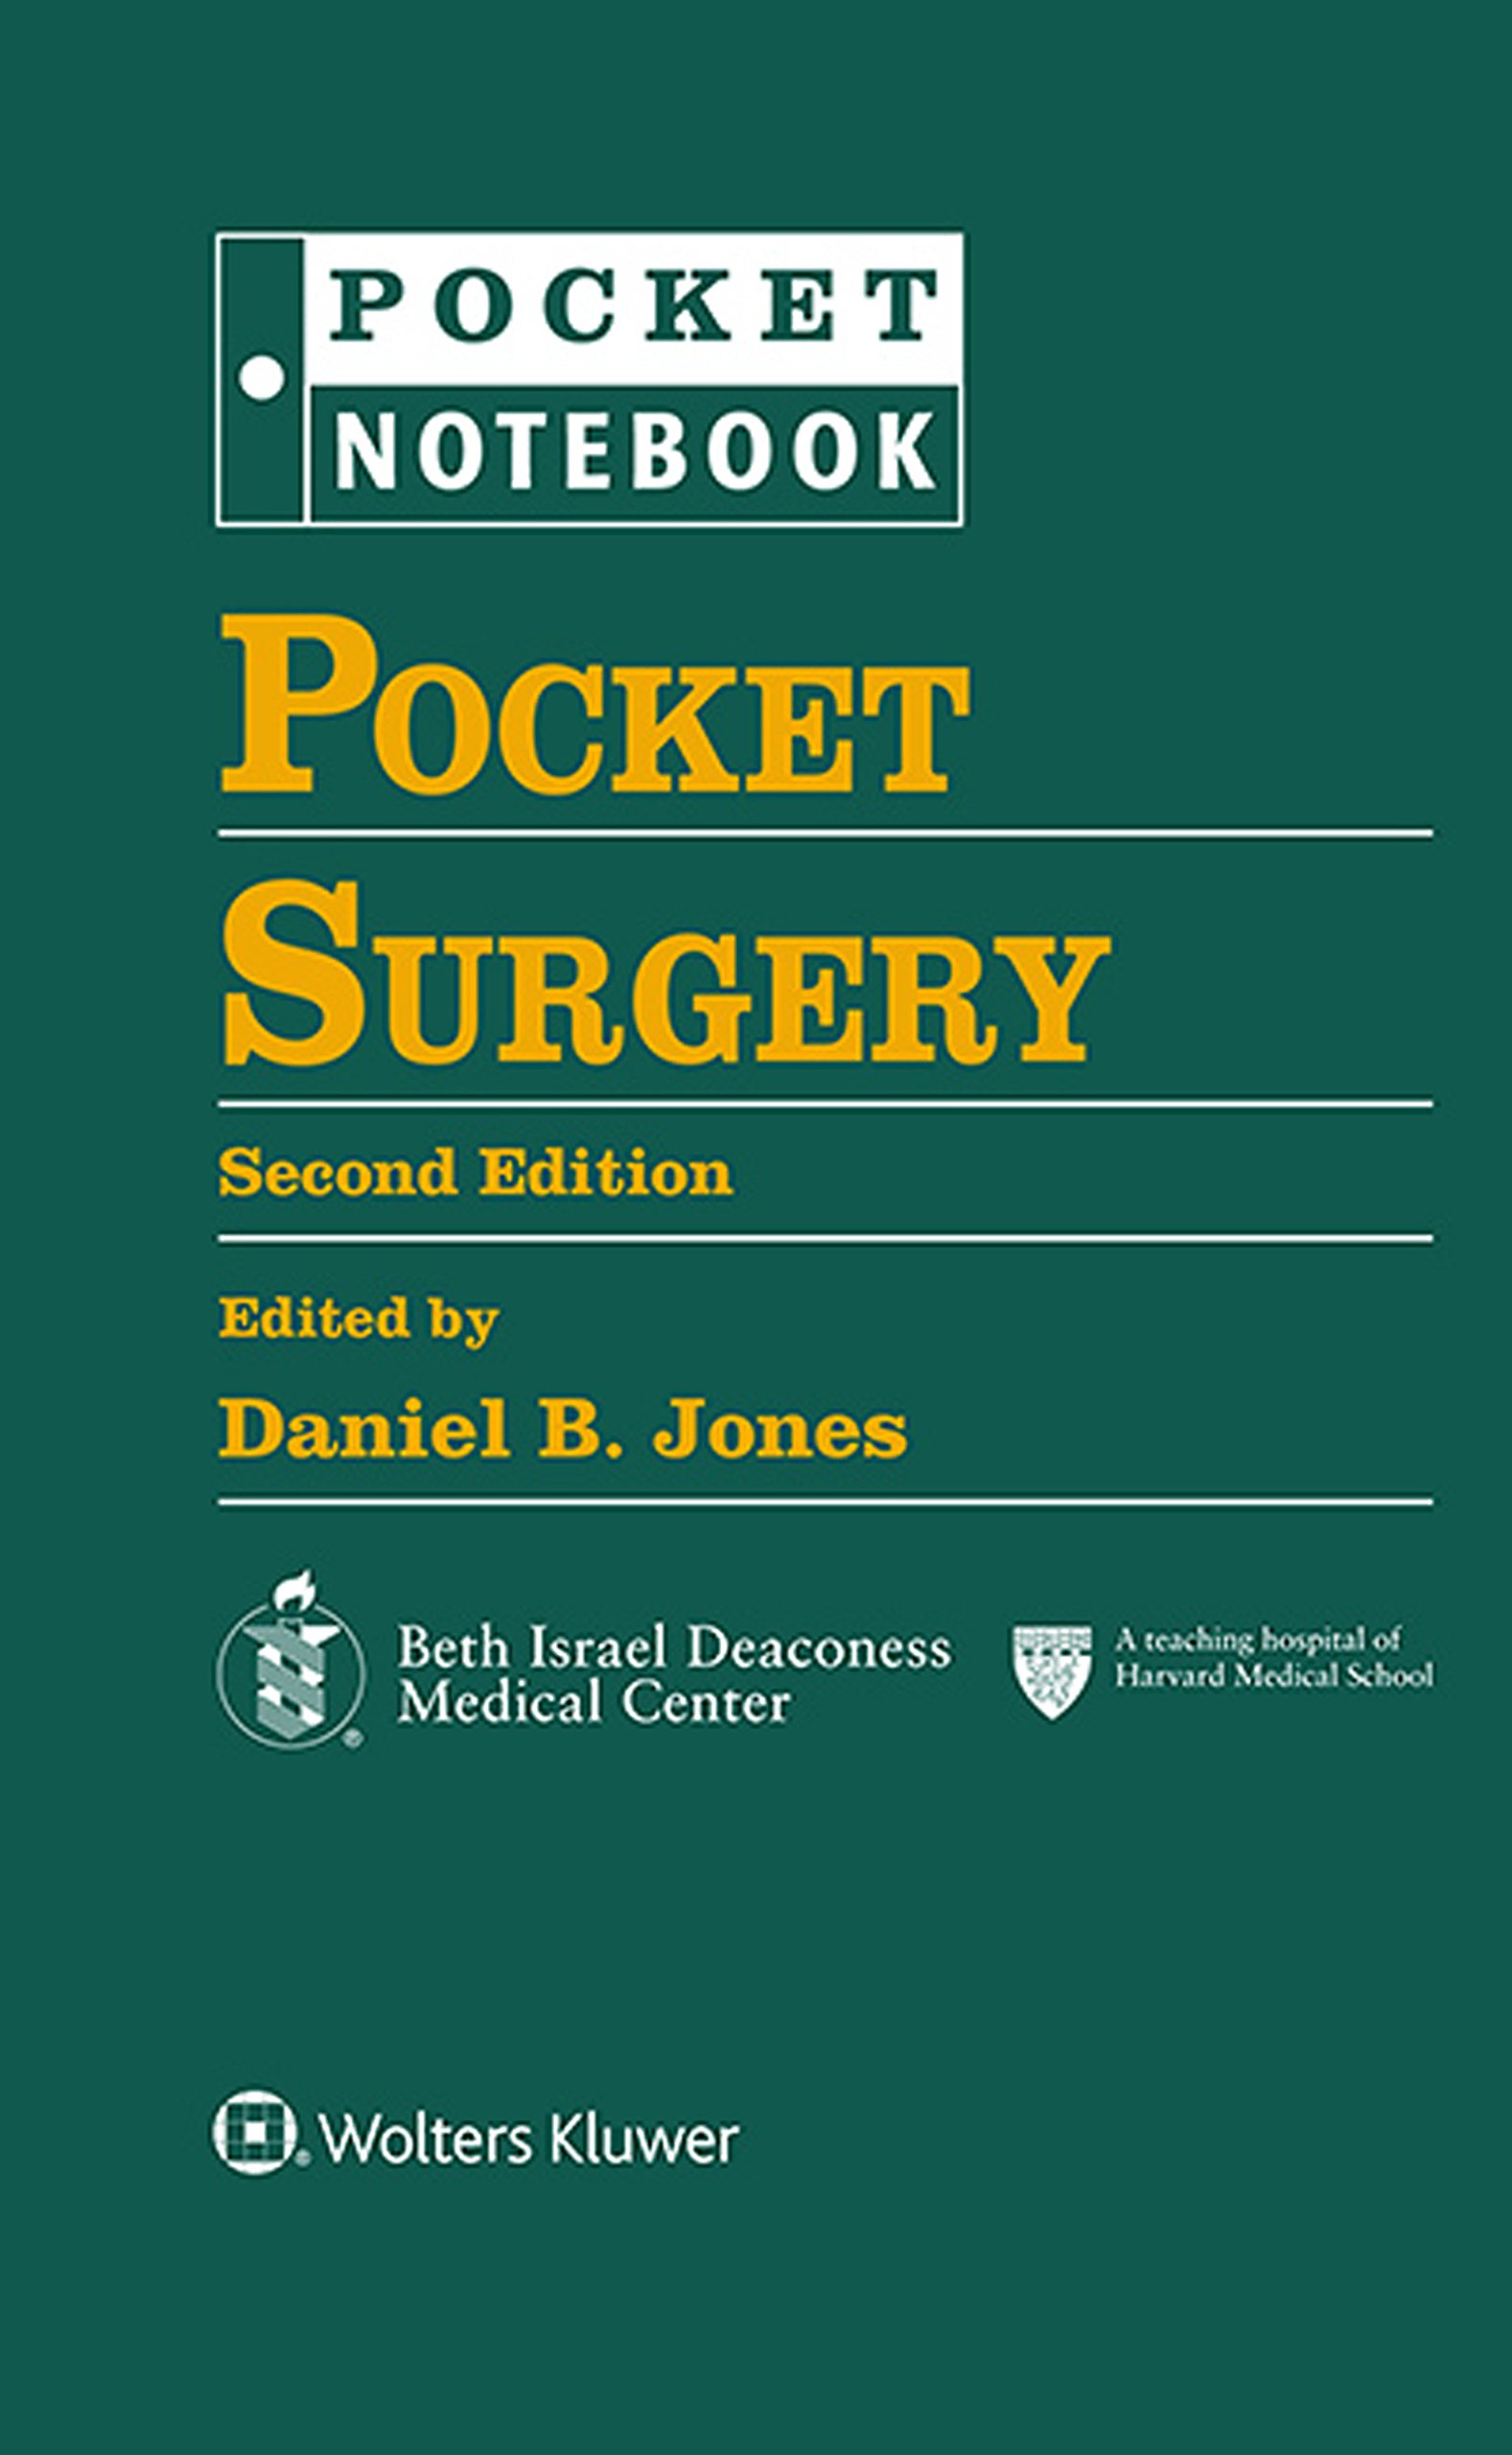 [PDF] Pocket Notebook Surgery 2nd Edition